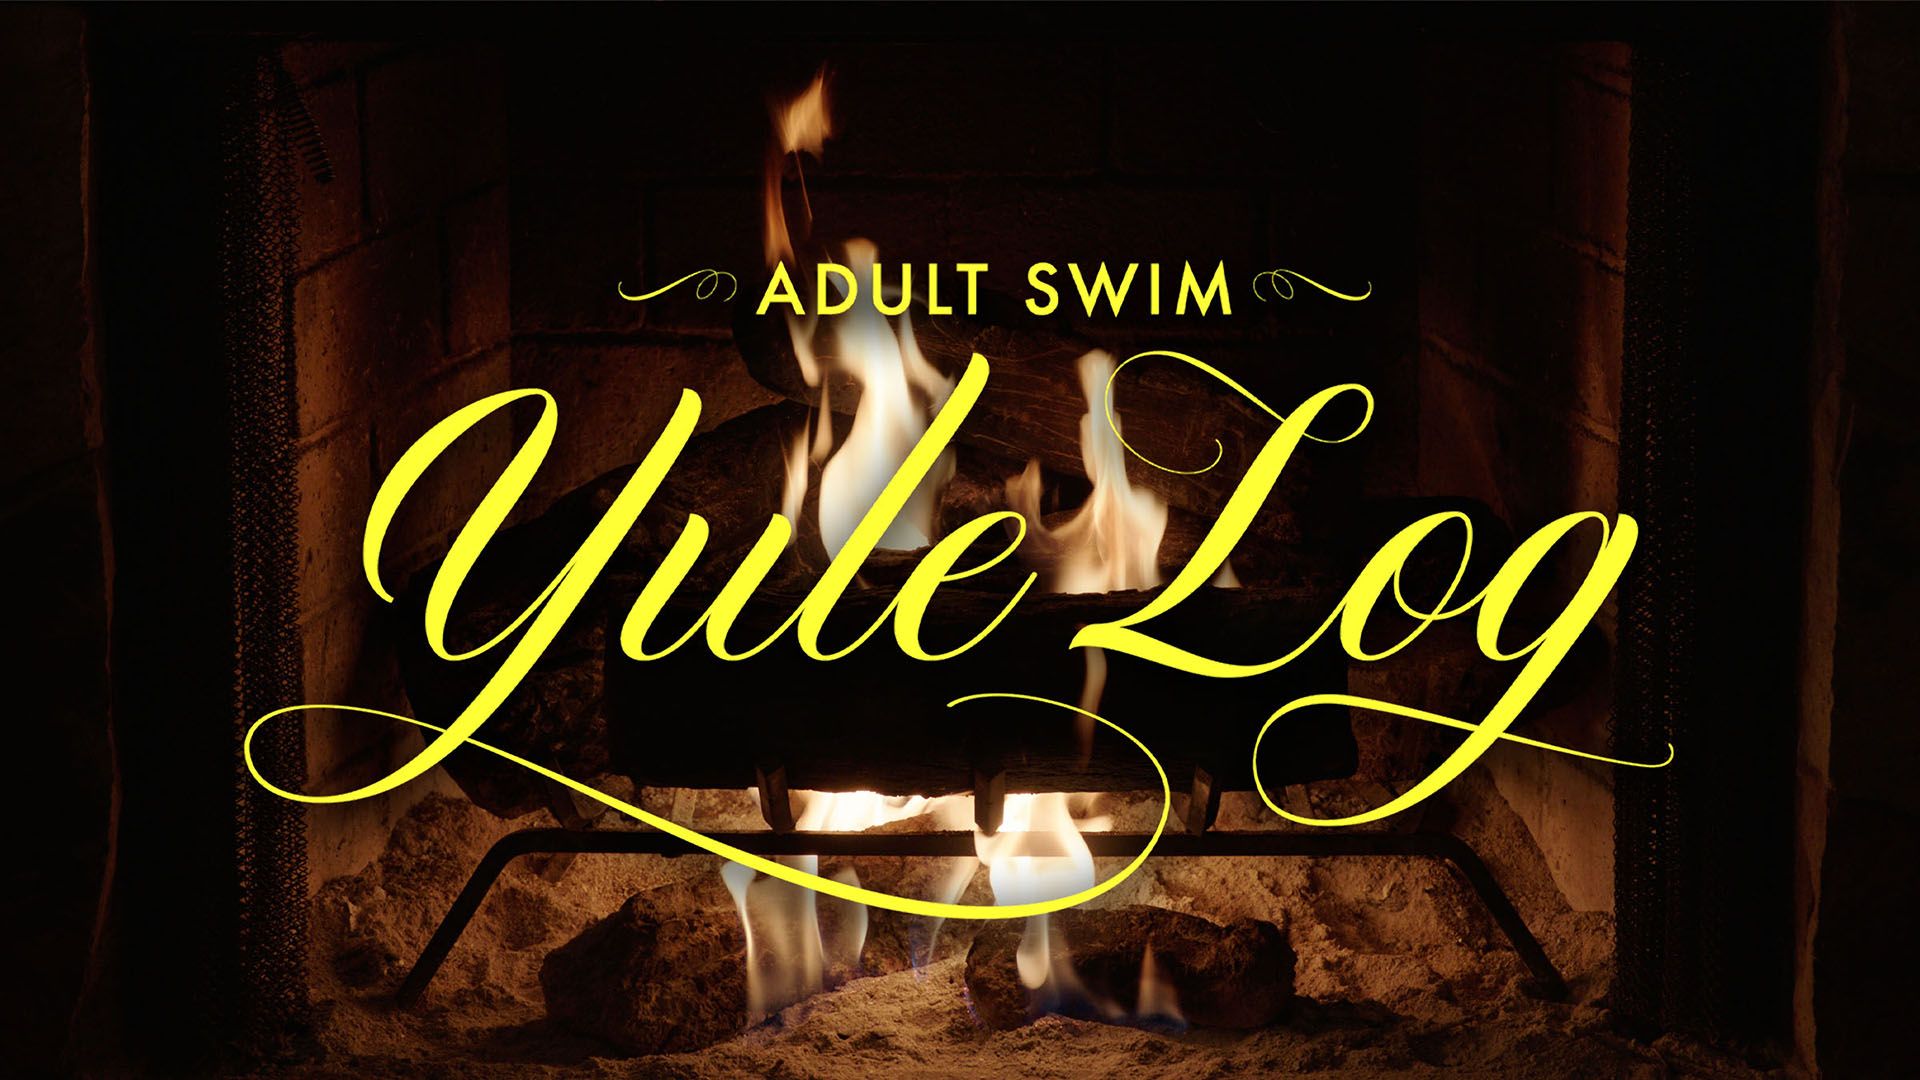 Watch Adult Swim Network Online